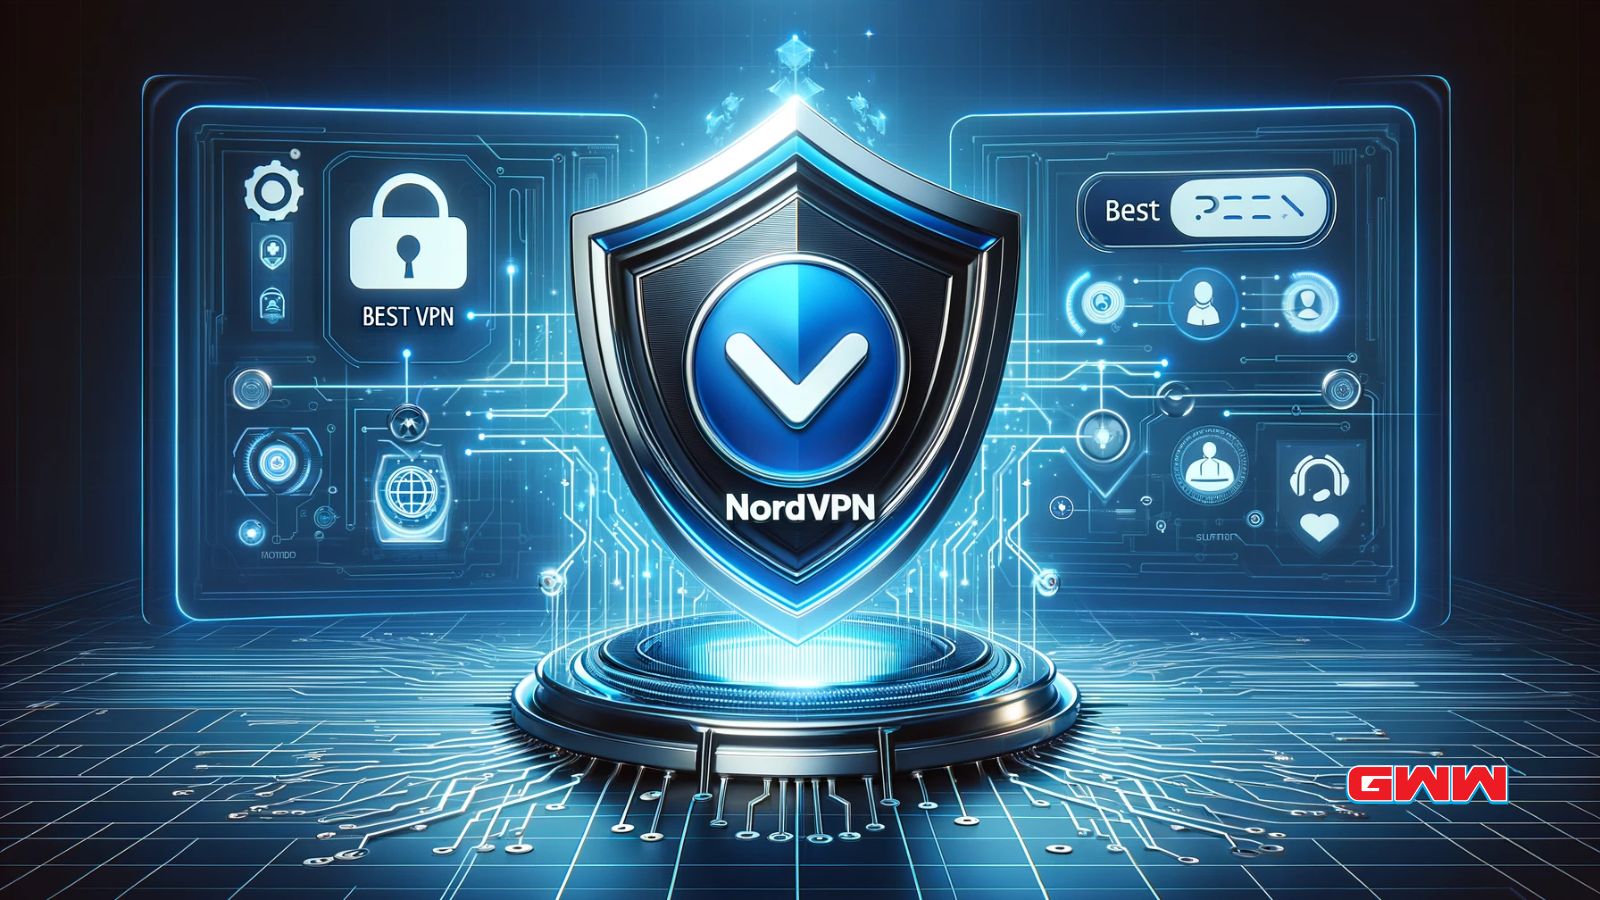 NordVPN as best VPN with digital security symbols